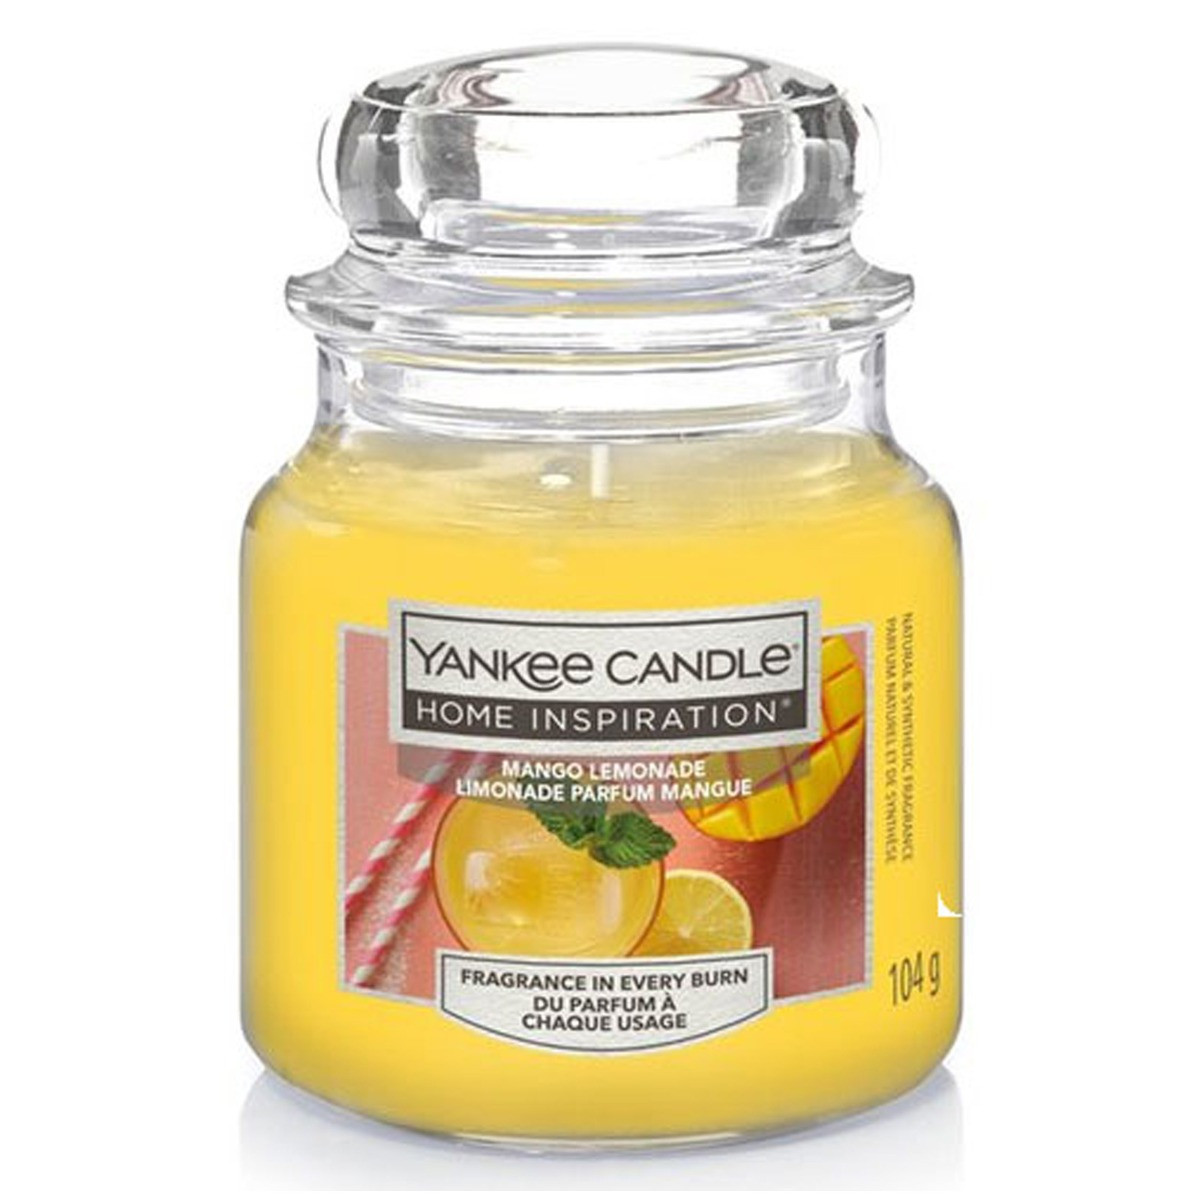 Yankee Candle Home Inspiration Small Jar - Mango Lemonade>